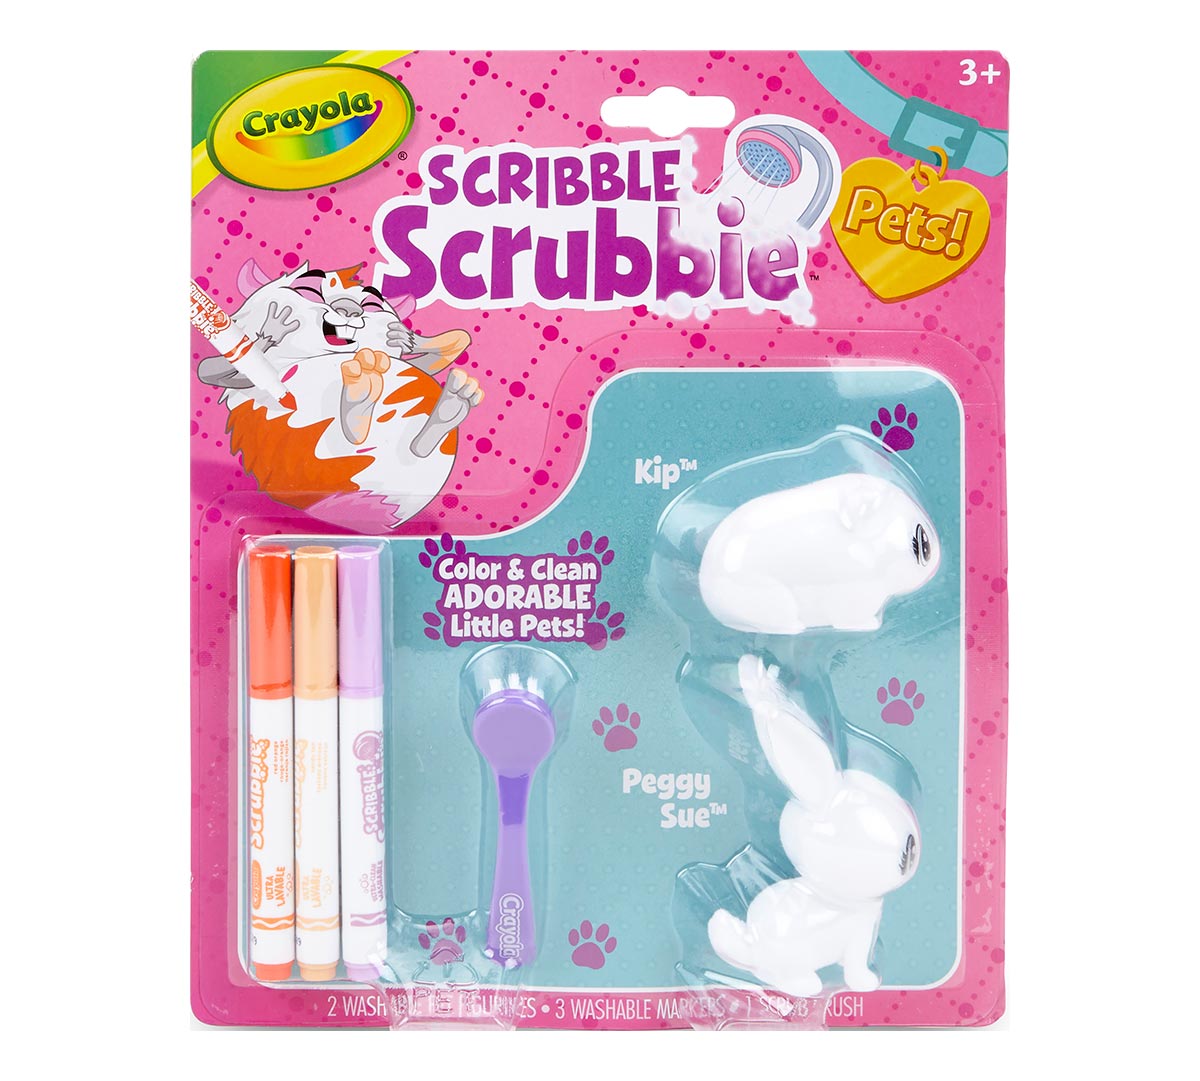 Crayola Scribble Scrubbie Pets TV Spot, 'So How's It Look?' 